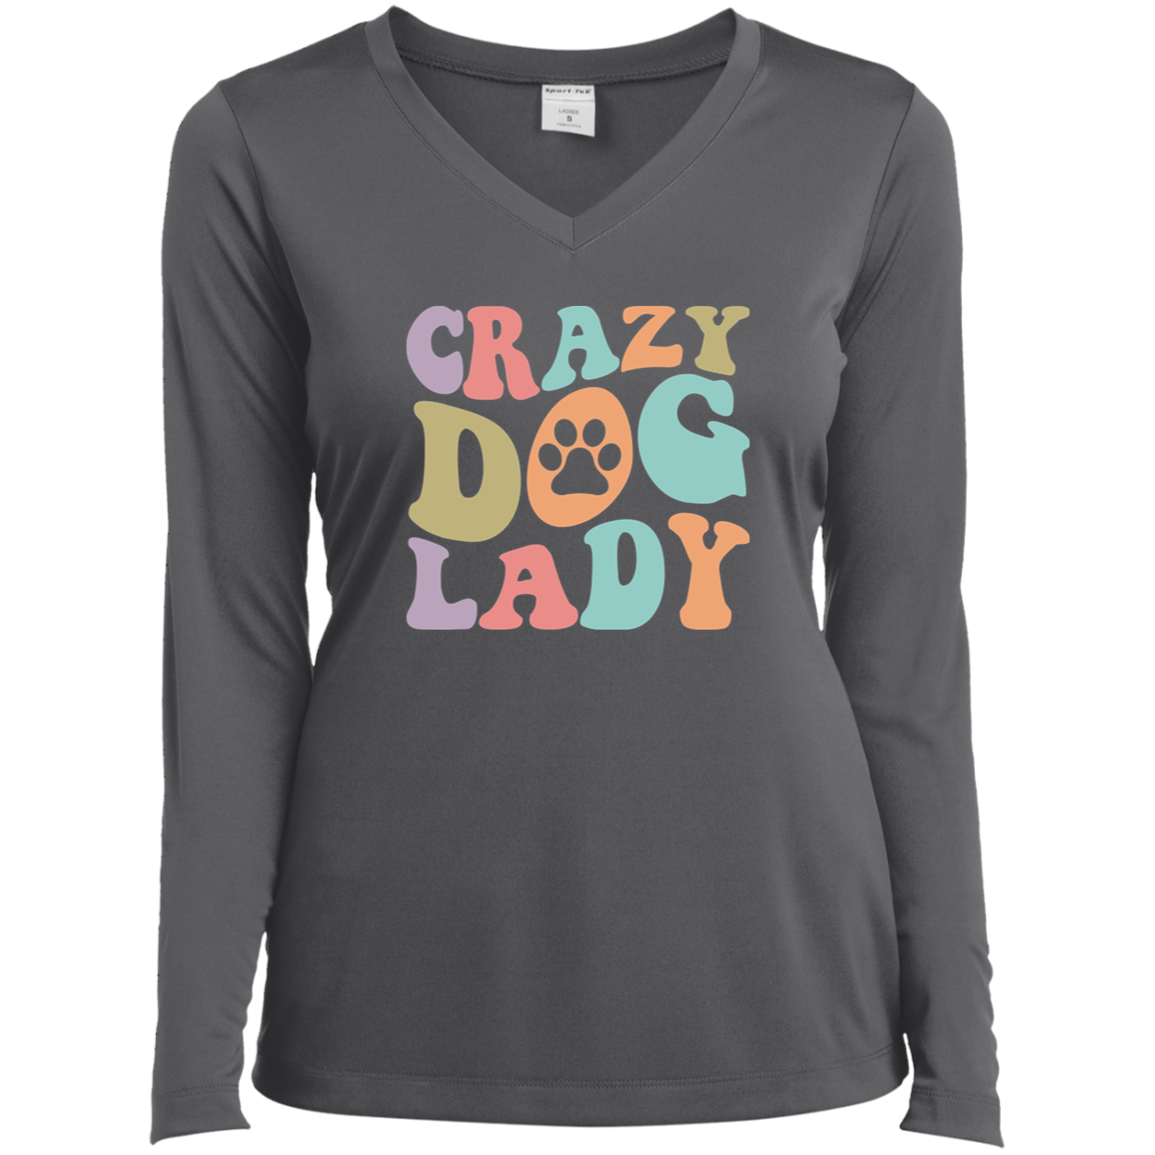 Crazy Dog Lady Paw Print Ladies’ Long Sleeve Performance V-Neck Tee